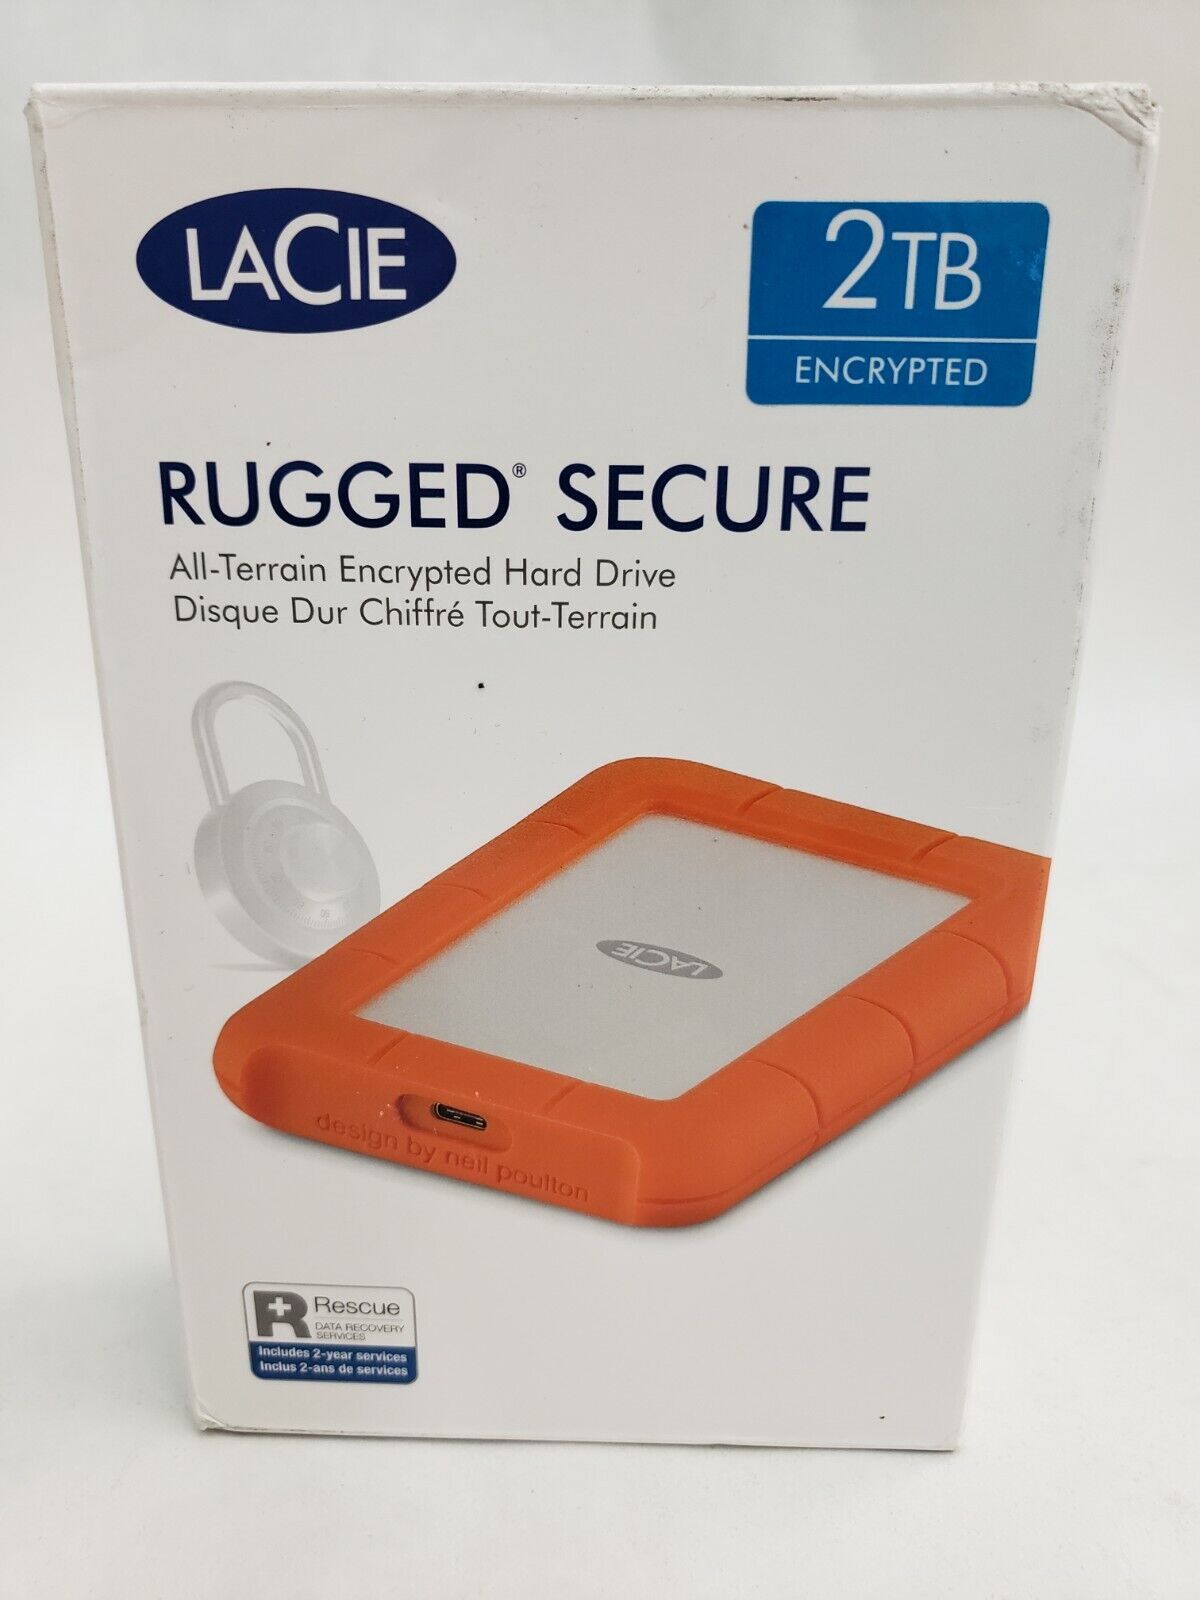 NEW LACIE RUGGED SECURE 2TB ENCRYPTED USB EXTERNAL HARD DRIVE ORANGE